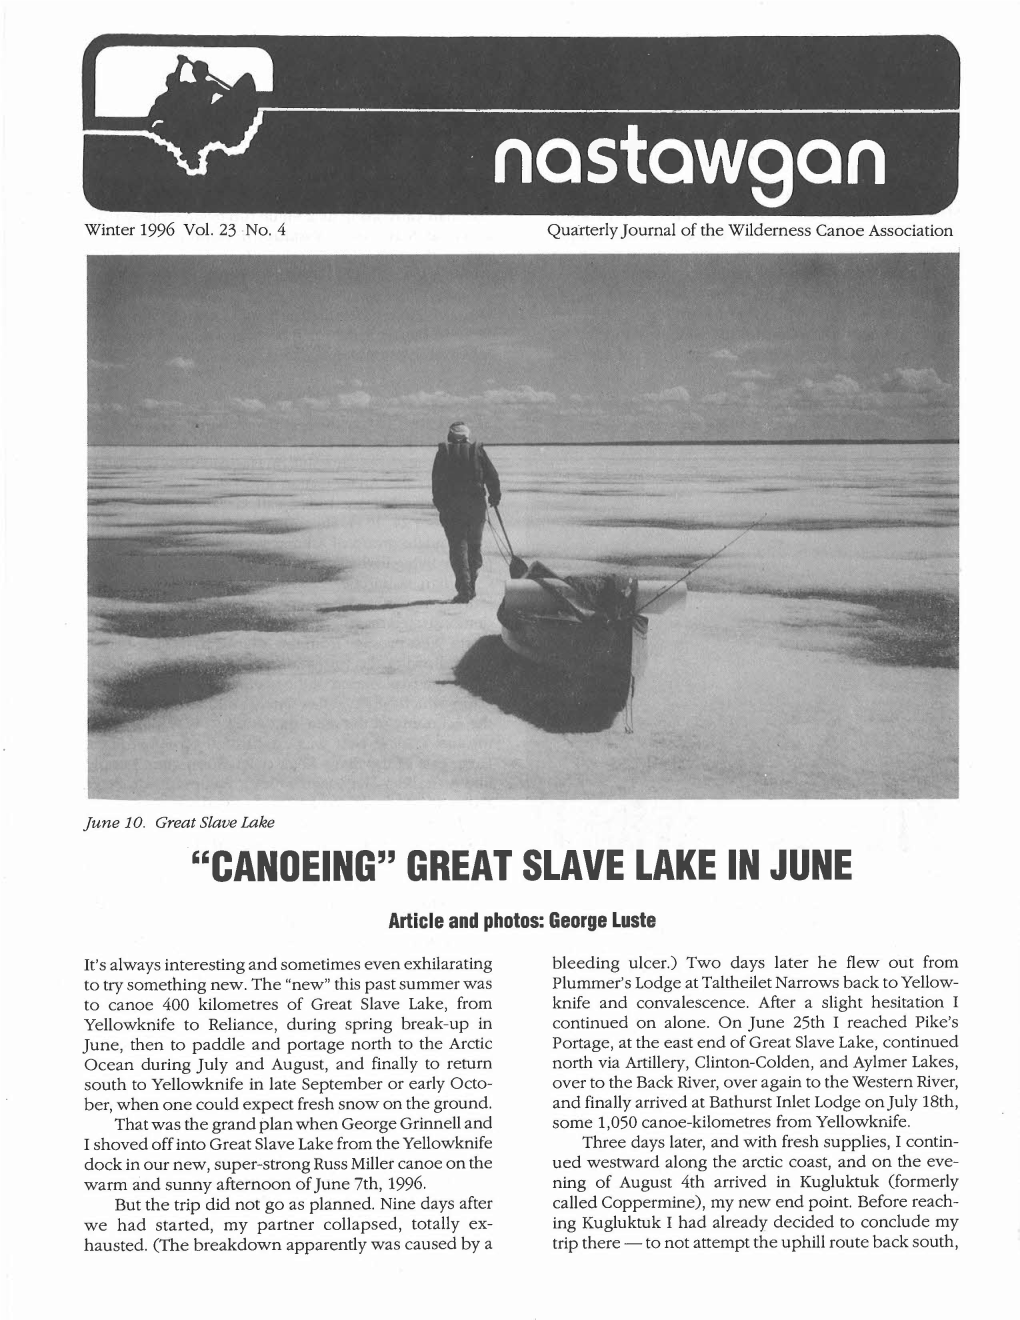 Canoeing" Great Slave Lake in June